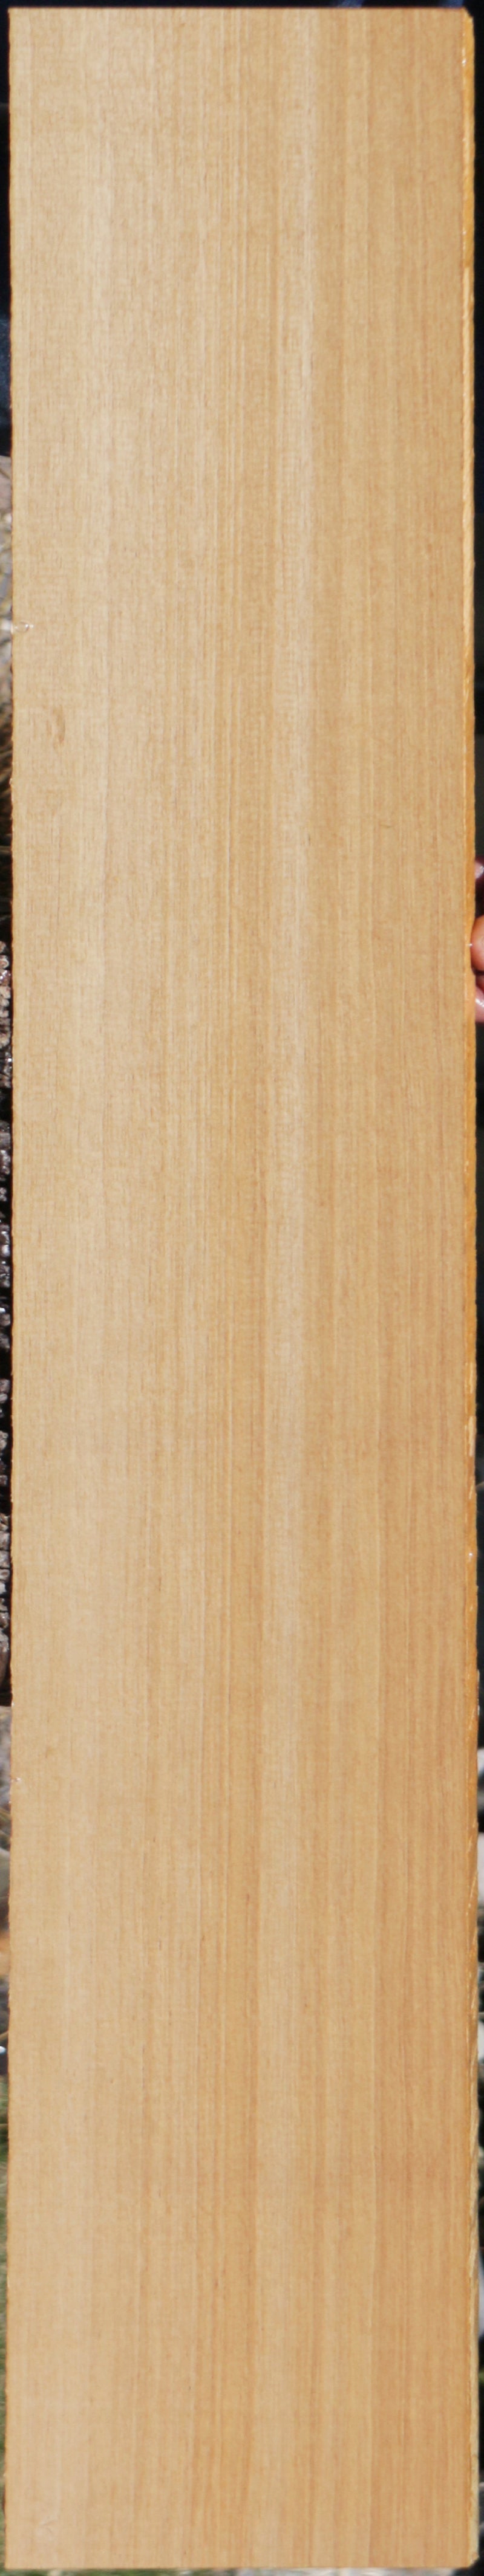 Aniegre Lumber